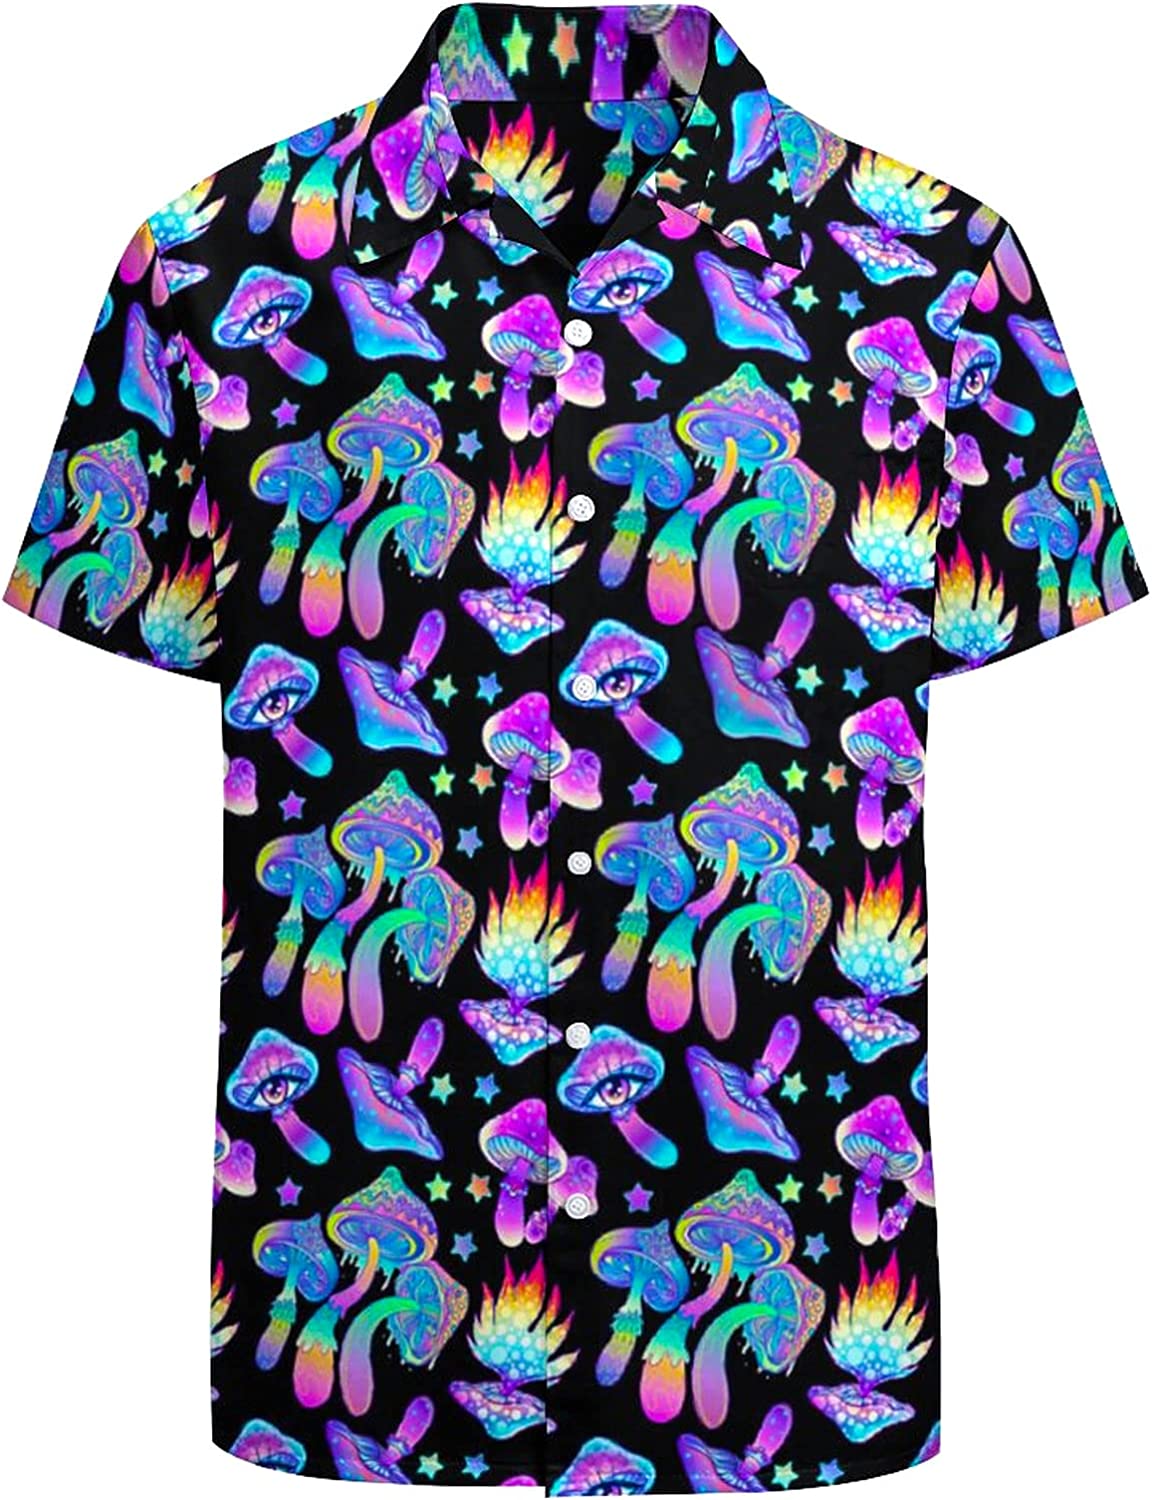 Artsadd 80s 90s Hawaiian Shirt for Men Big and Tall Button Down Short Sleeve Shirt Aloha Beach Shirts Disco Party Outfits